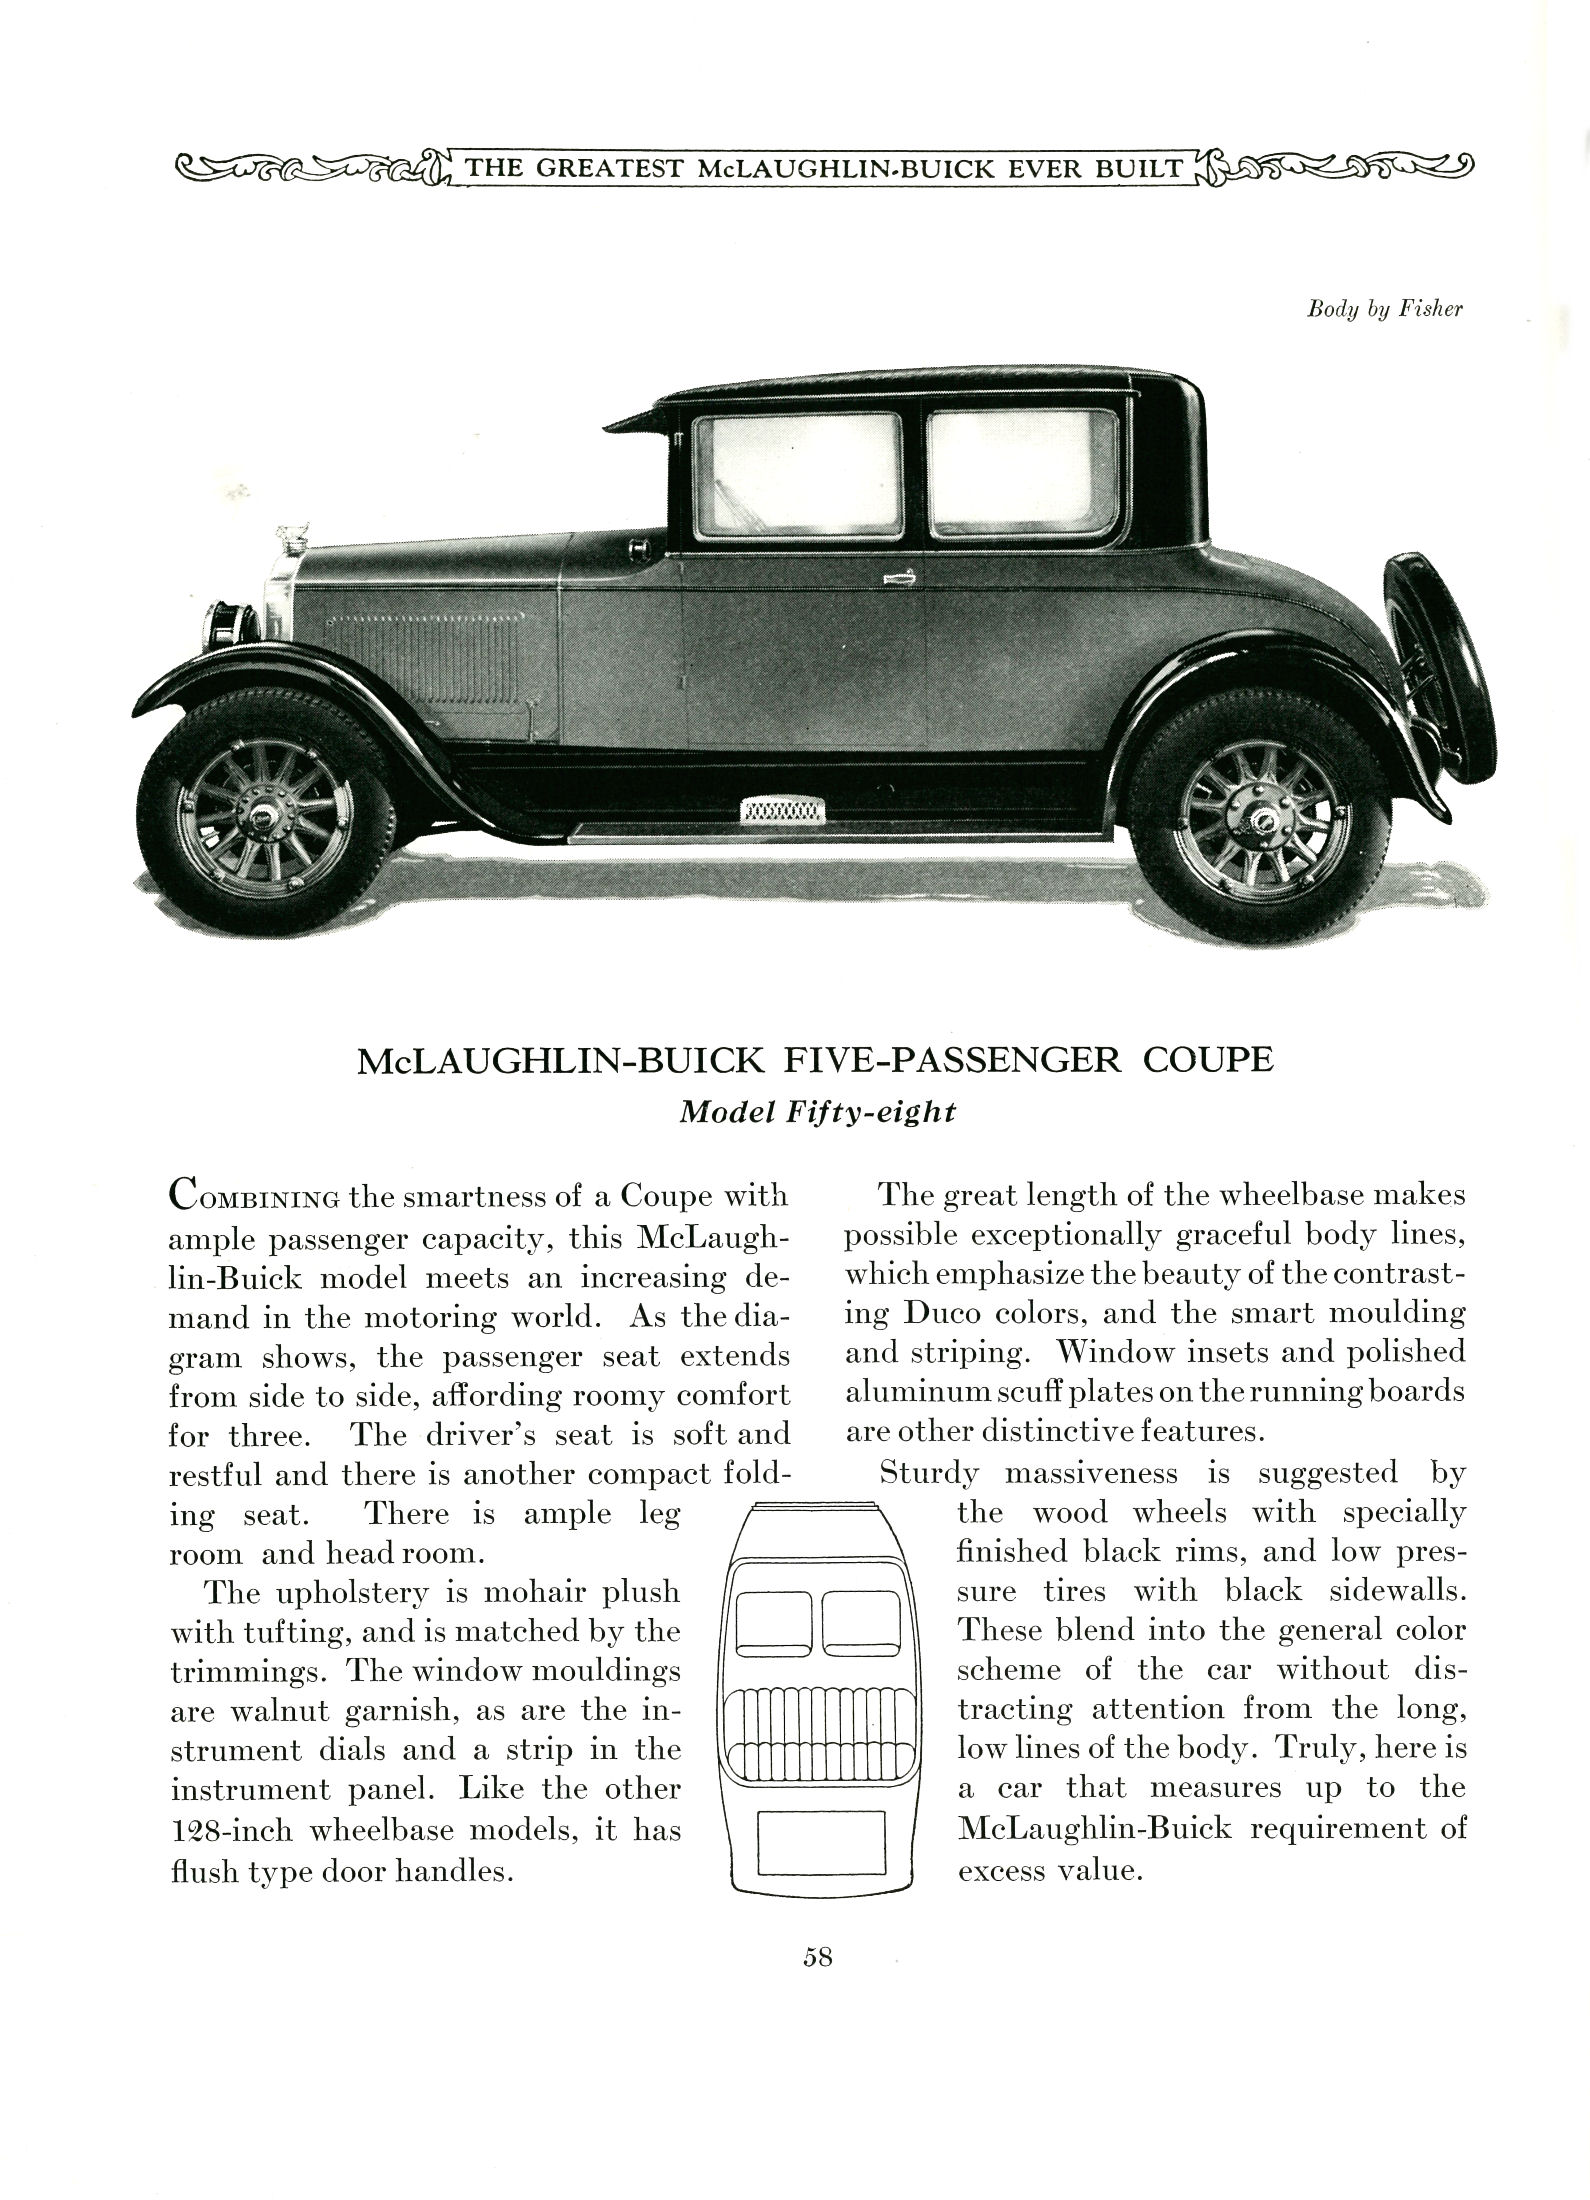 1930 McLaughlin Buick Booklet-58